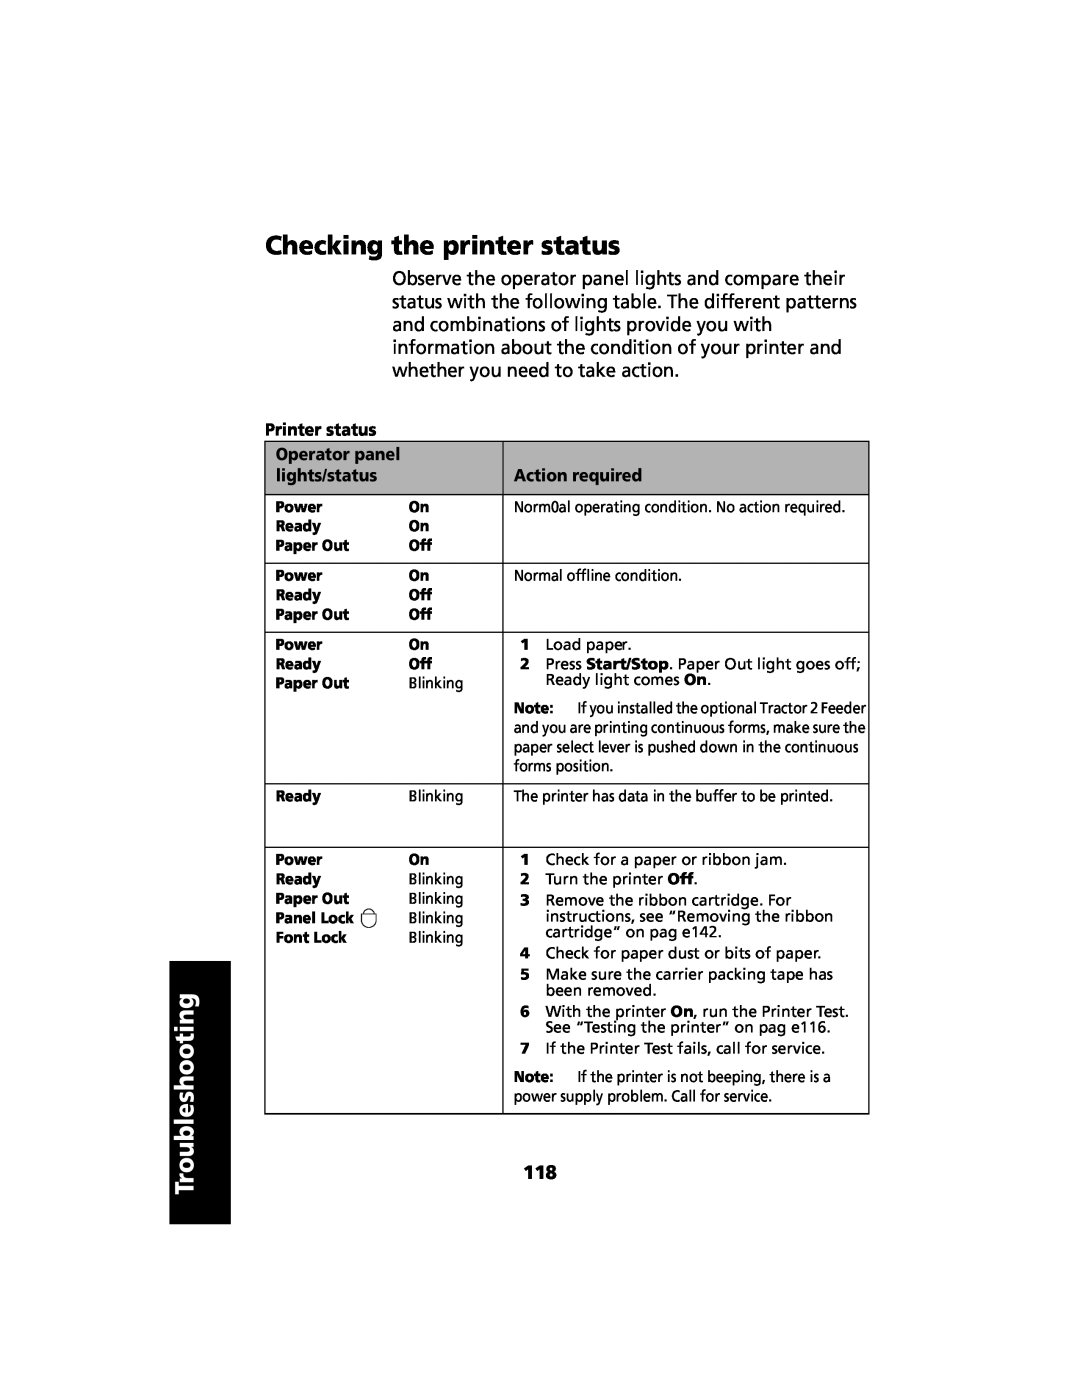 Lexmark 2480 Checking the printer status, Troubleshooting, Printer status, Operator panel, lights/status, Action required 